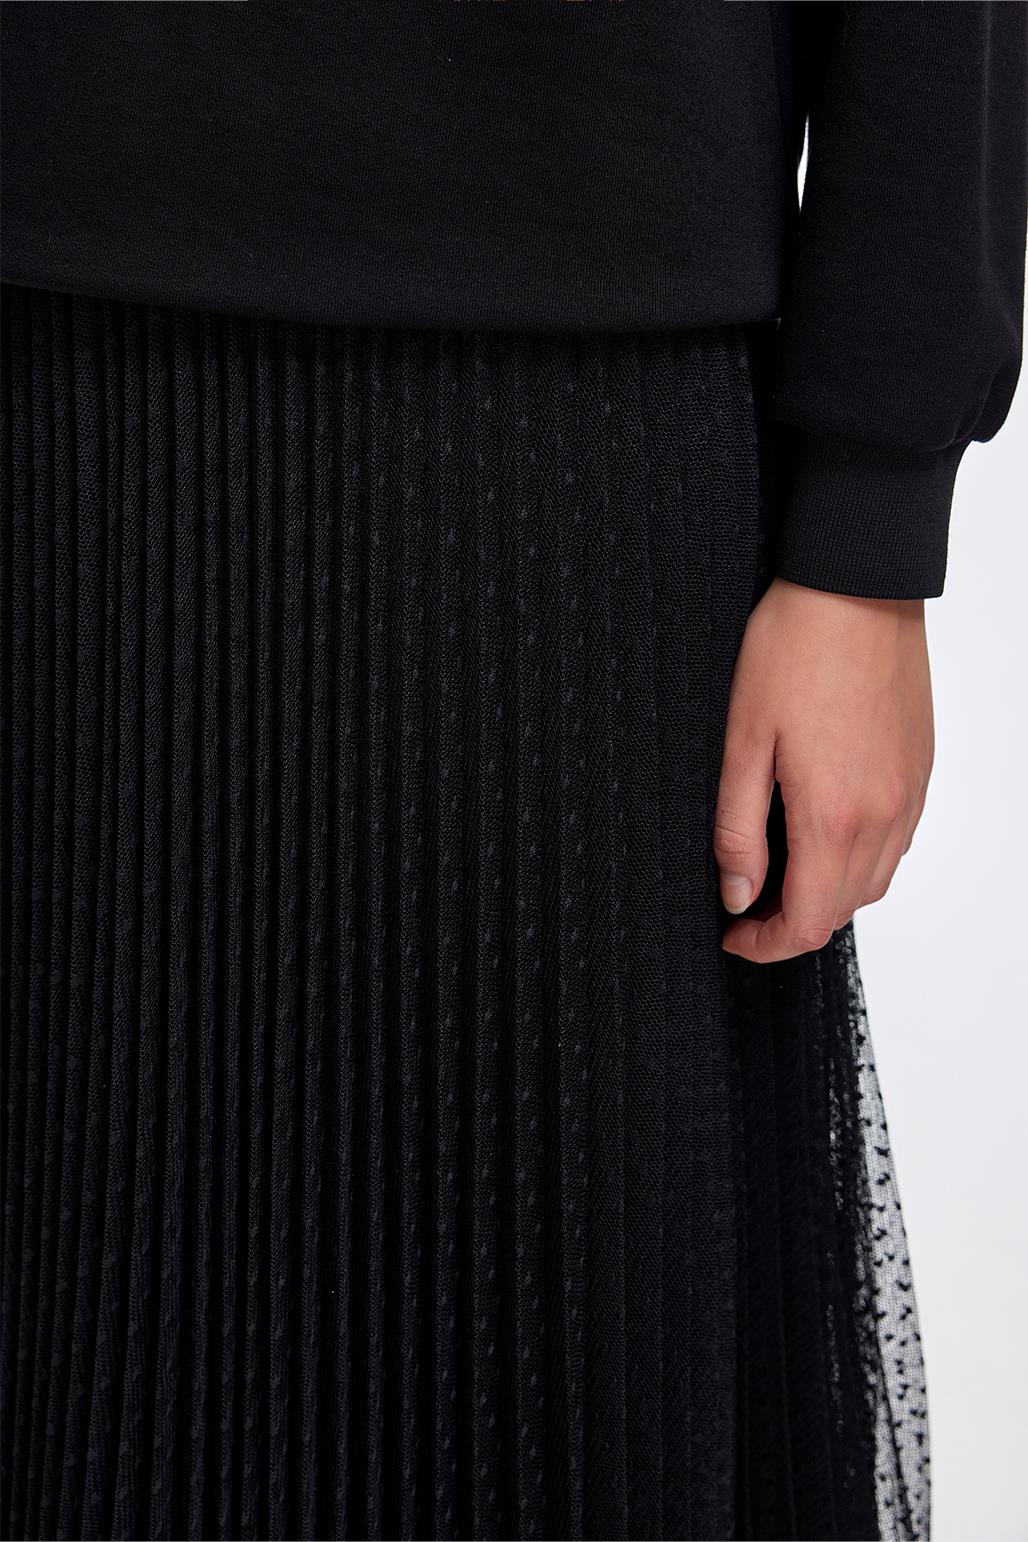 Patterned Pleated Tulle Skirt Black